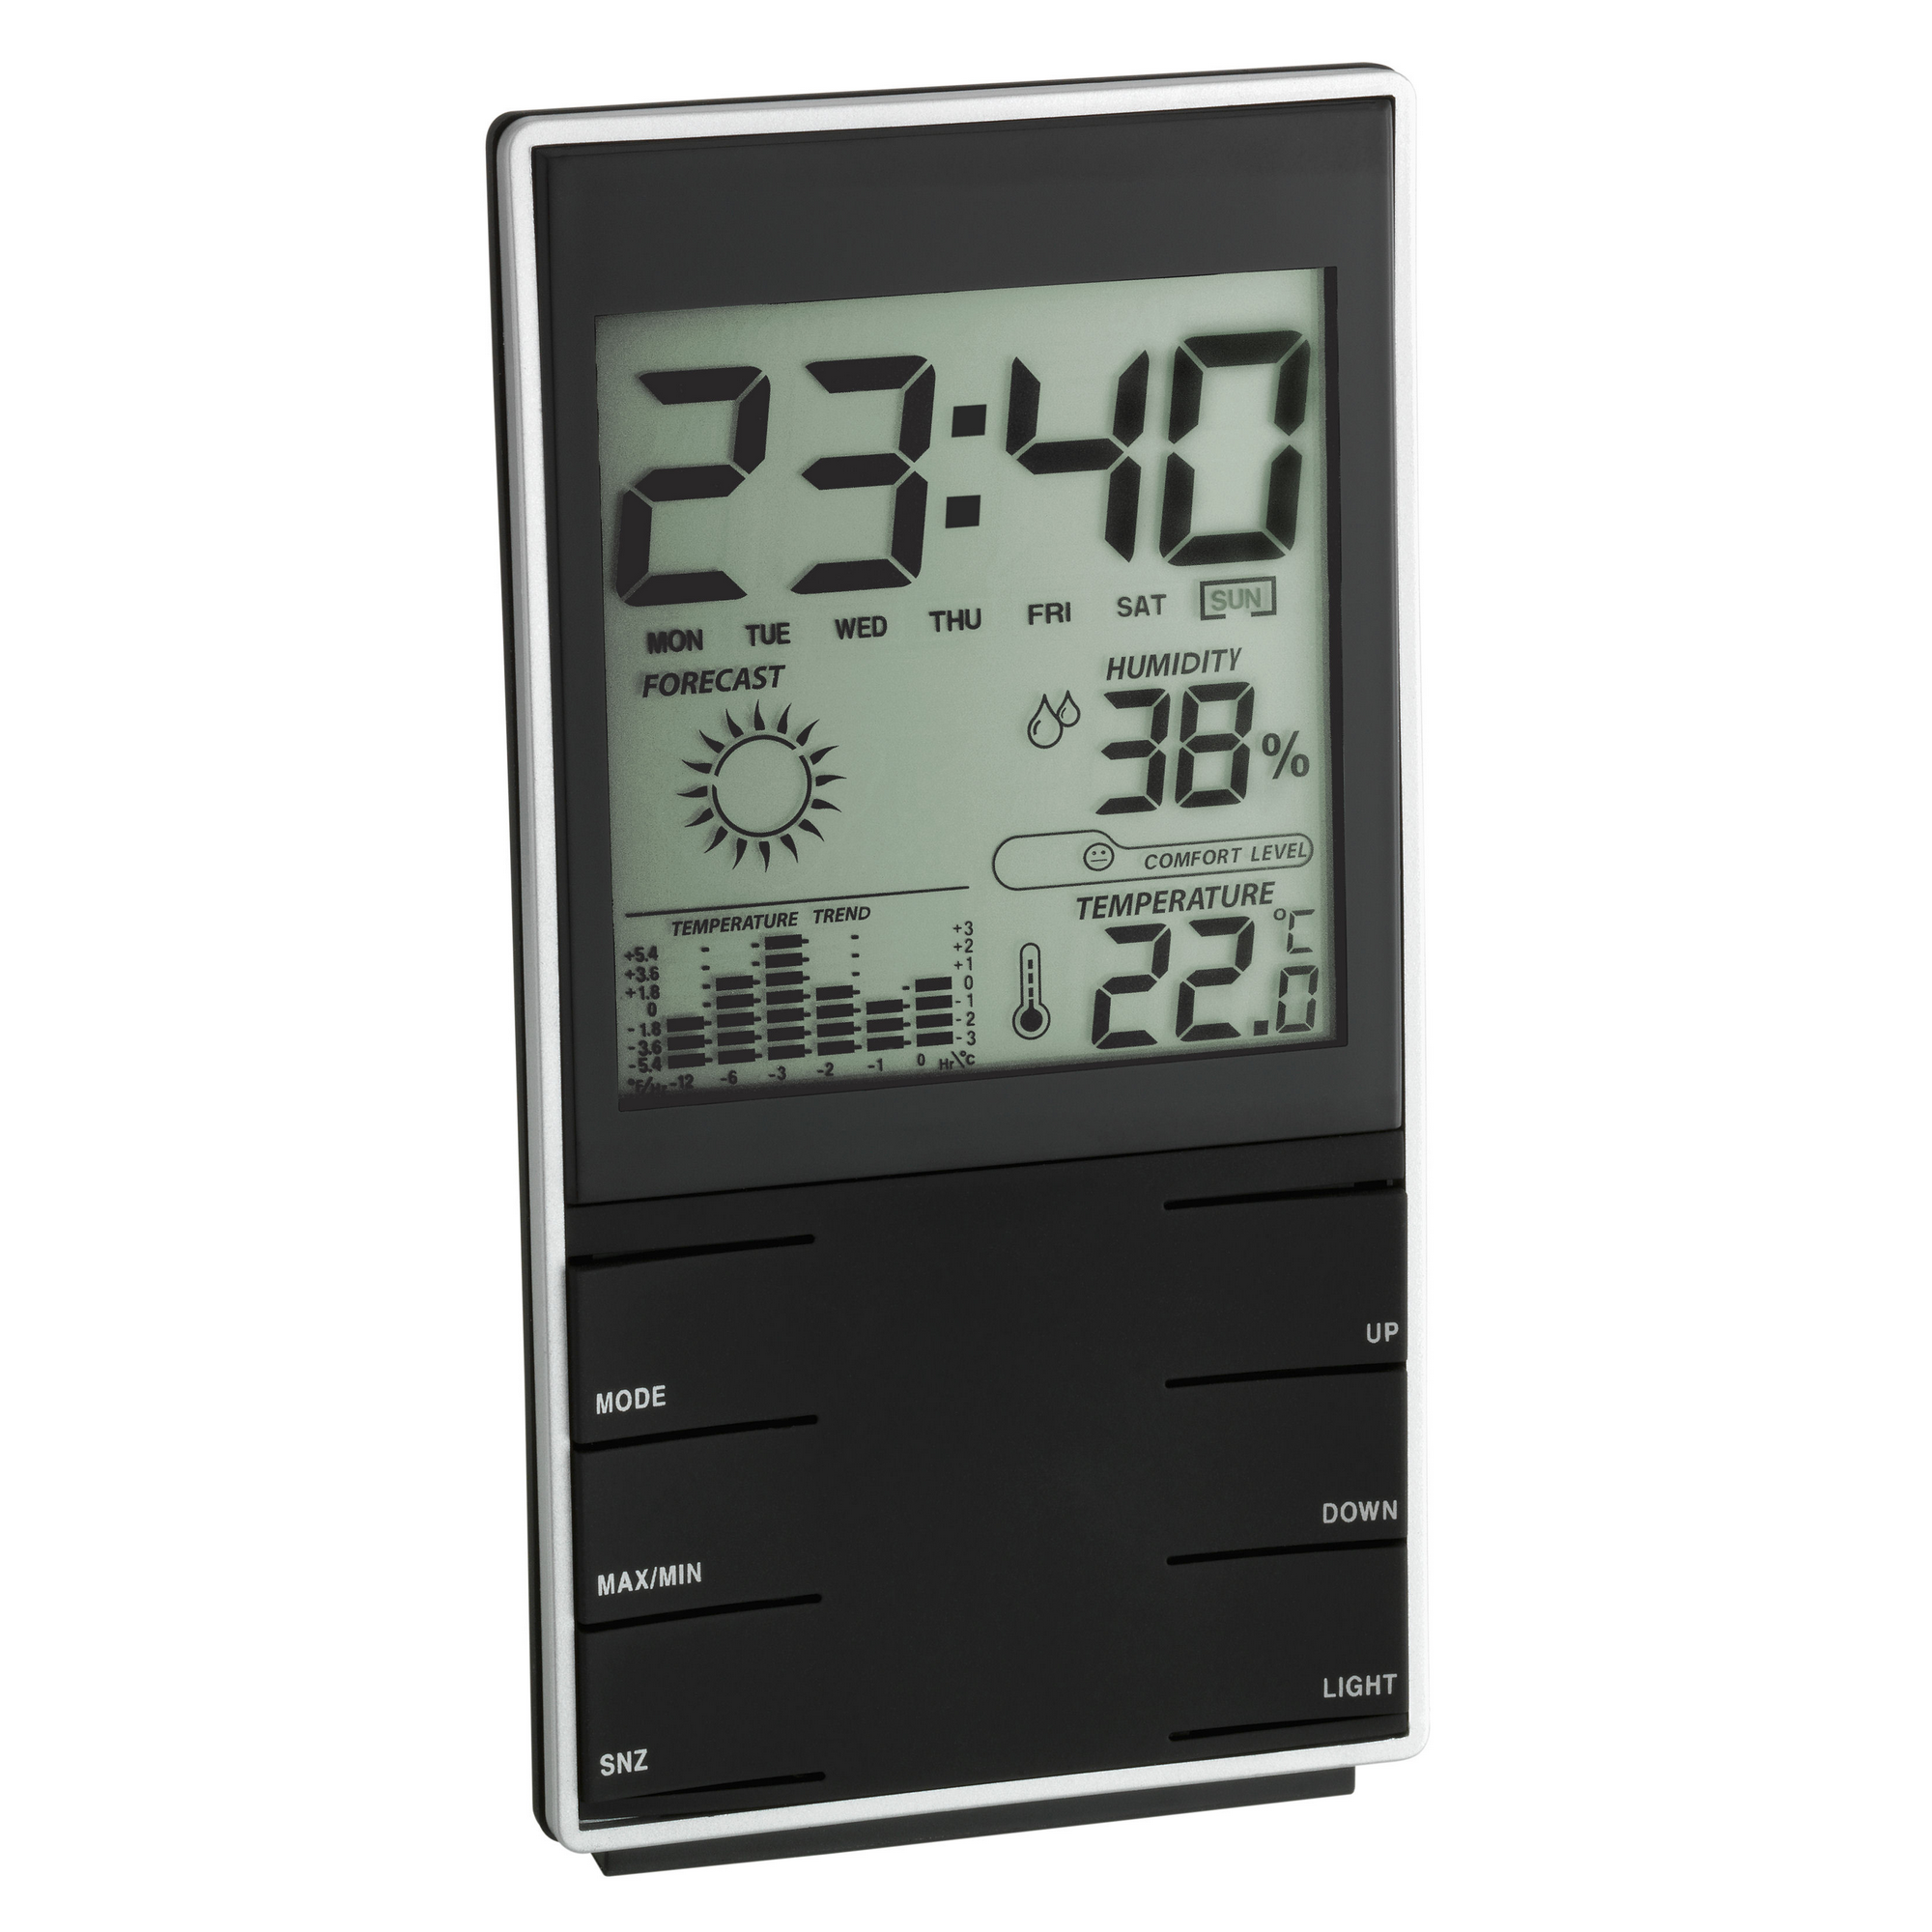 Digitales Funk-Thermometer 'Info' Kunststoff silber 7,7 x 2,2 x 8,6 cm